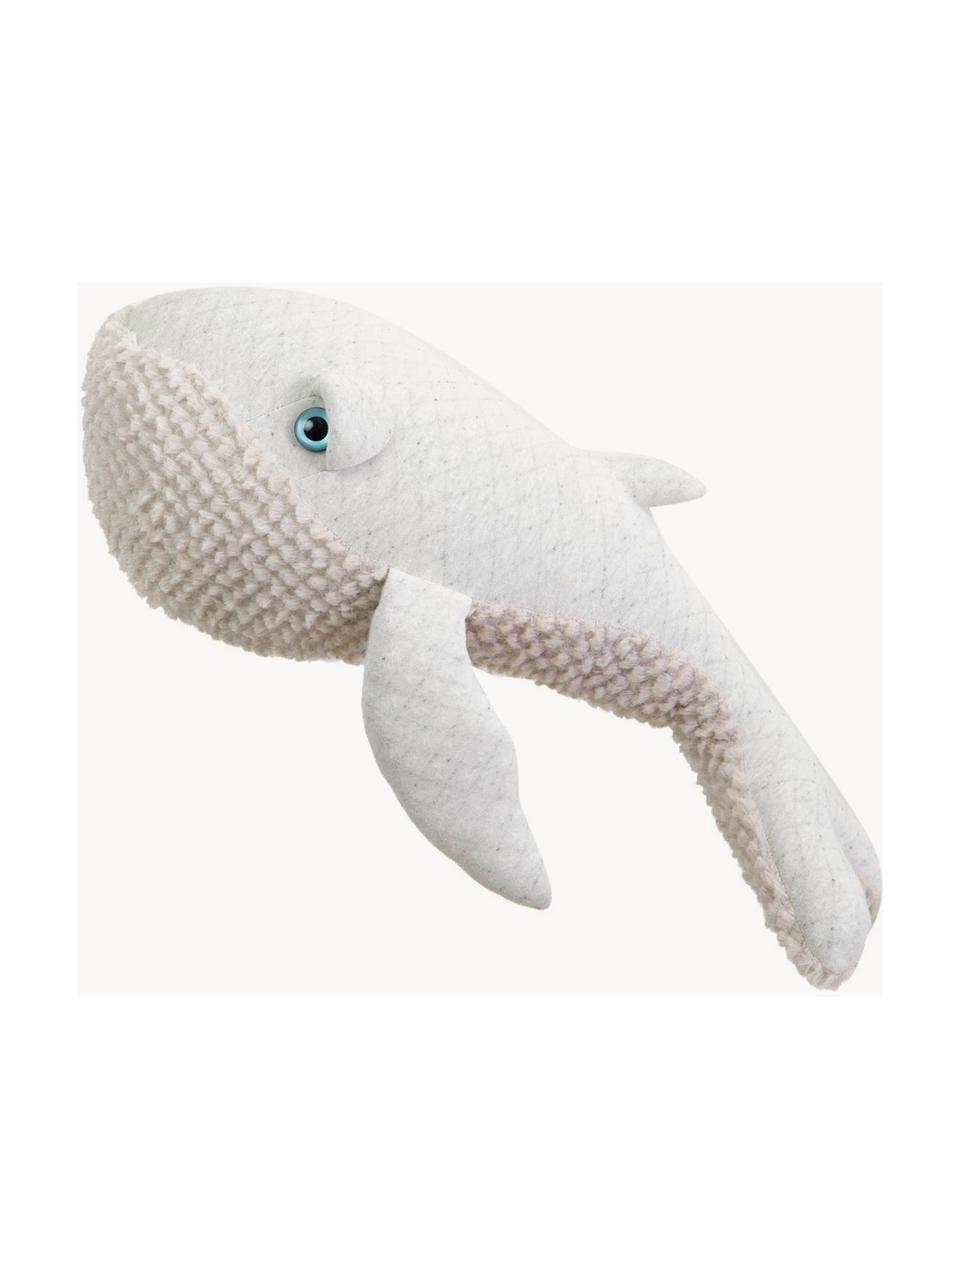 Ručně vyrobený měkký polštář Whale, Bílá, Š 83 cm, V 33 cm